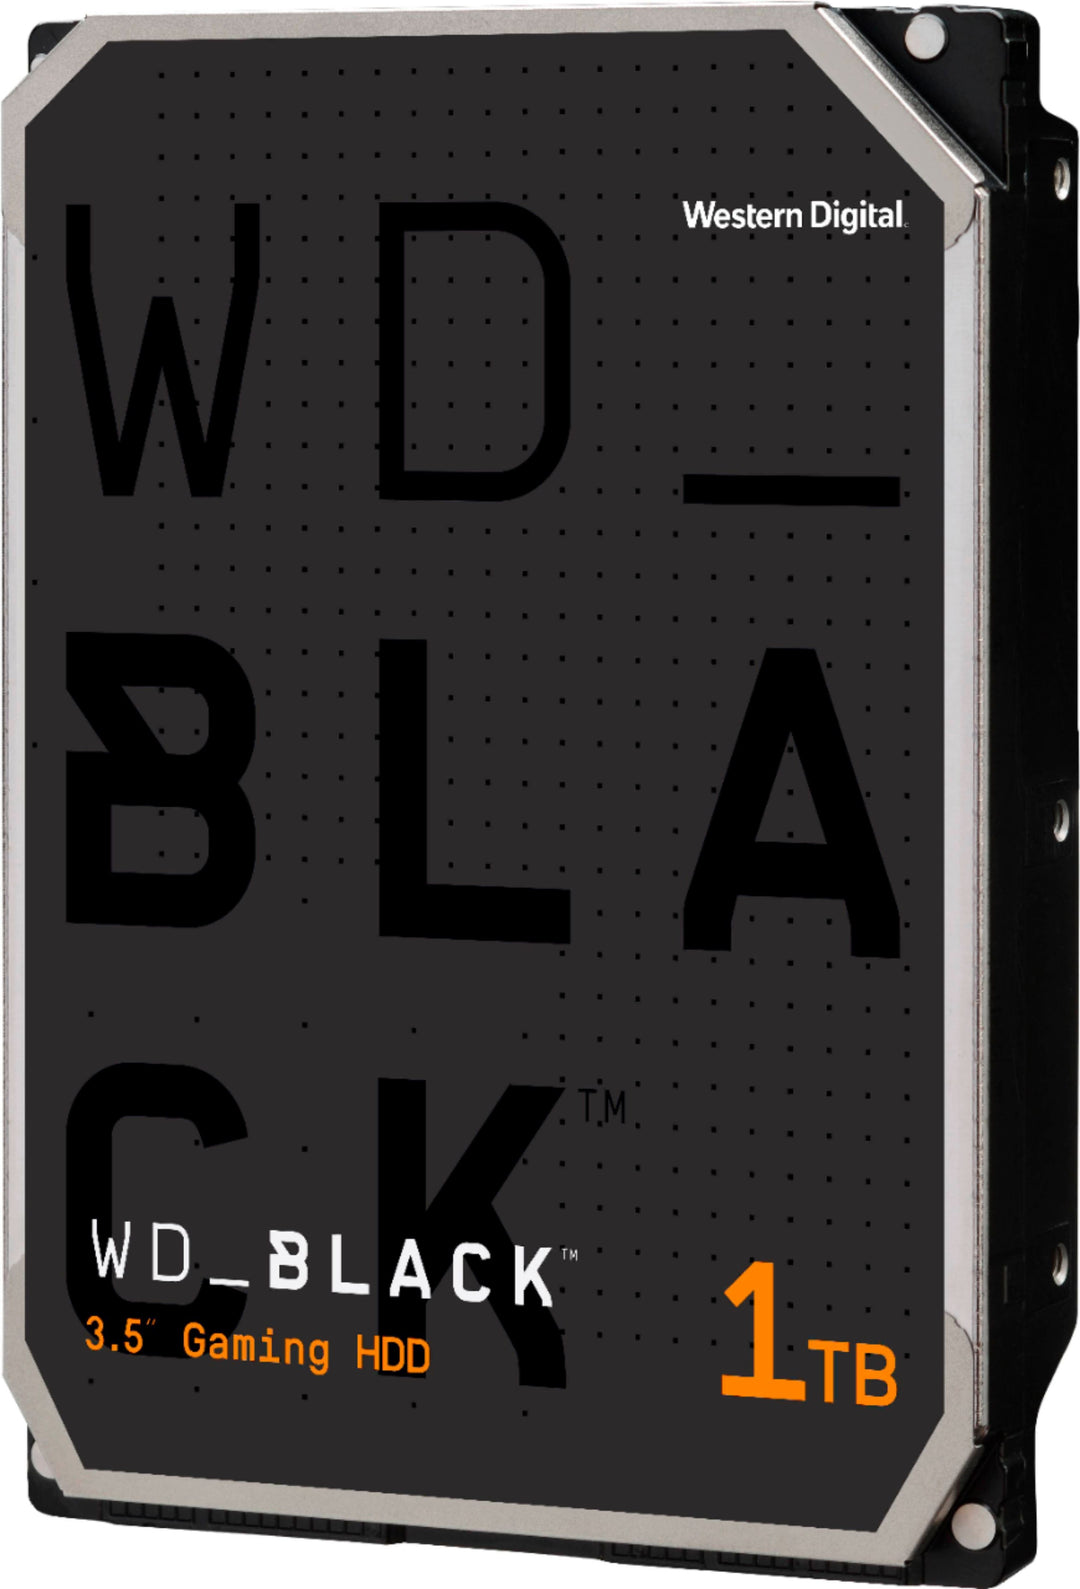 WD - BLACK Gaming 1TB Internal SATA Hard Drive for Desktops_2